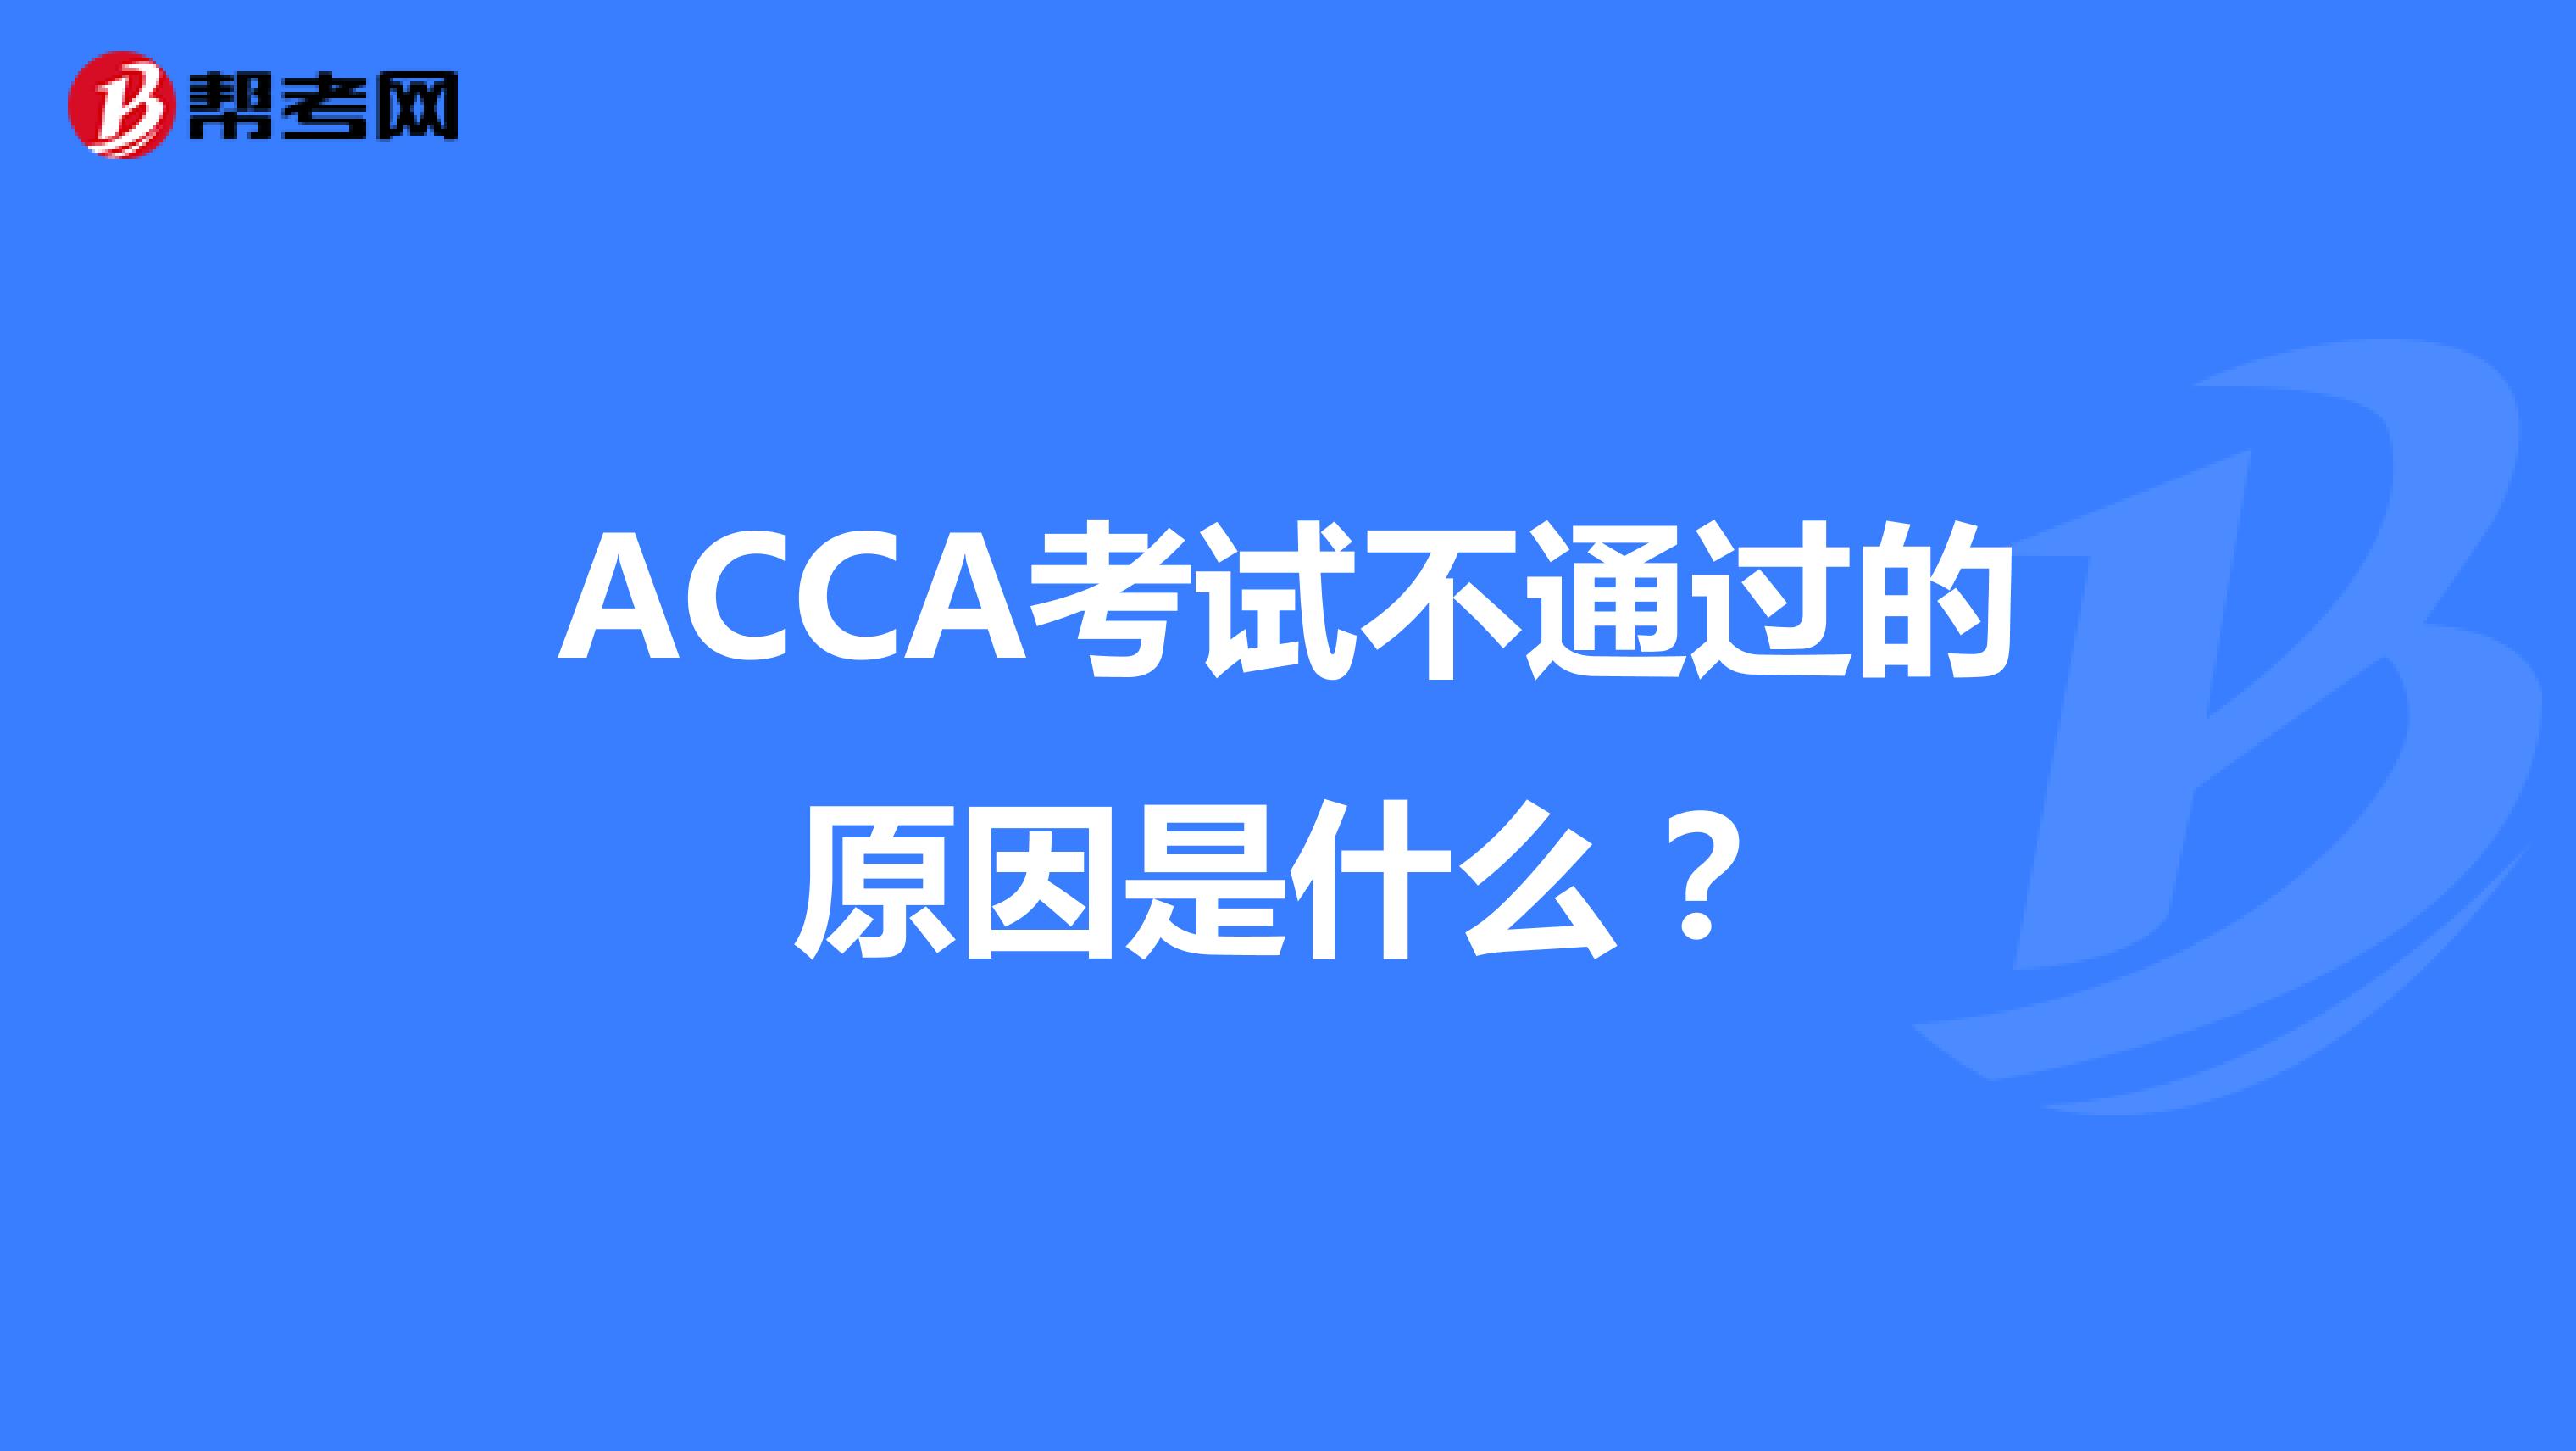 ACCA考试不通过的原因是什么？